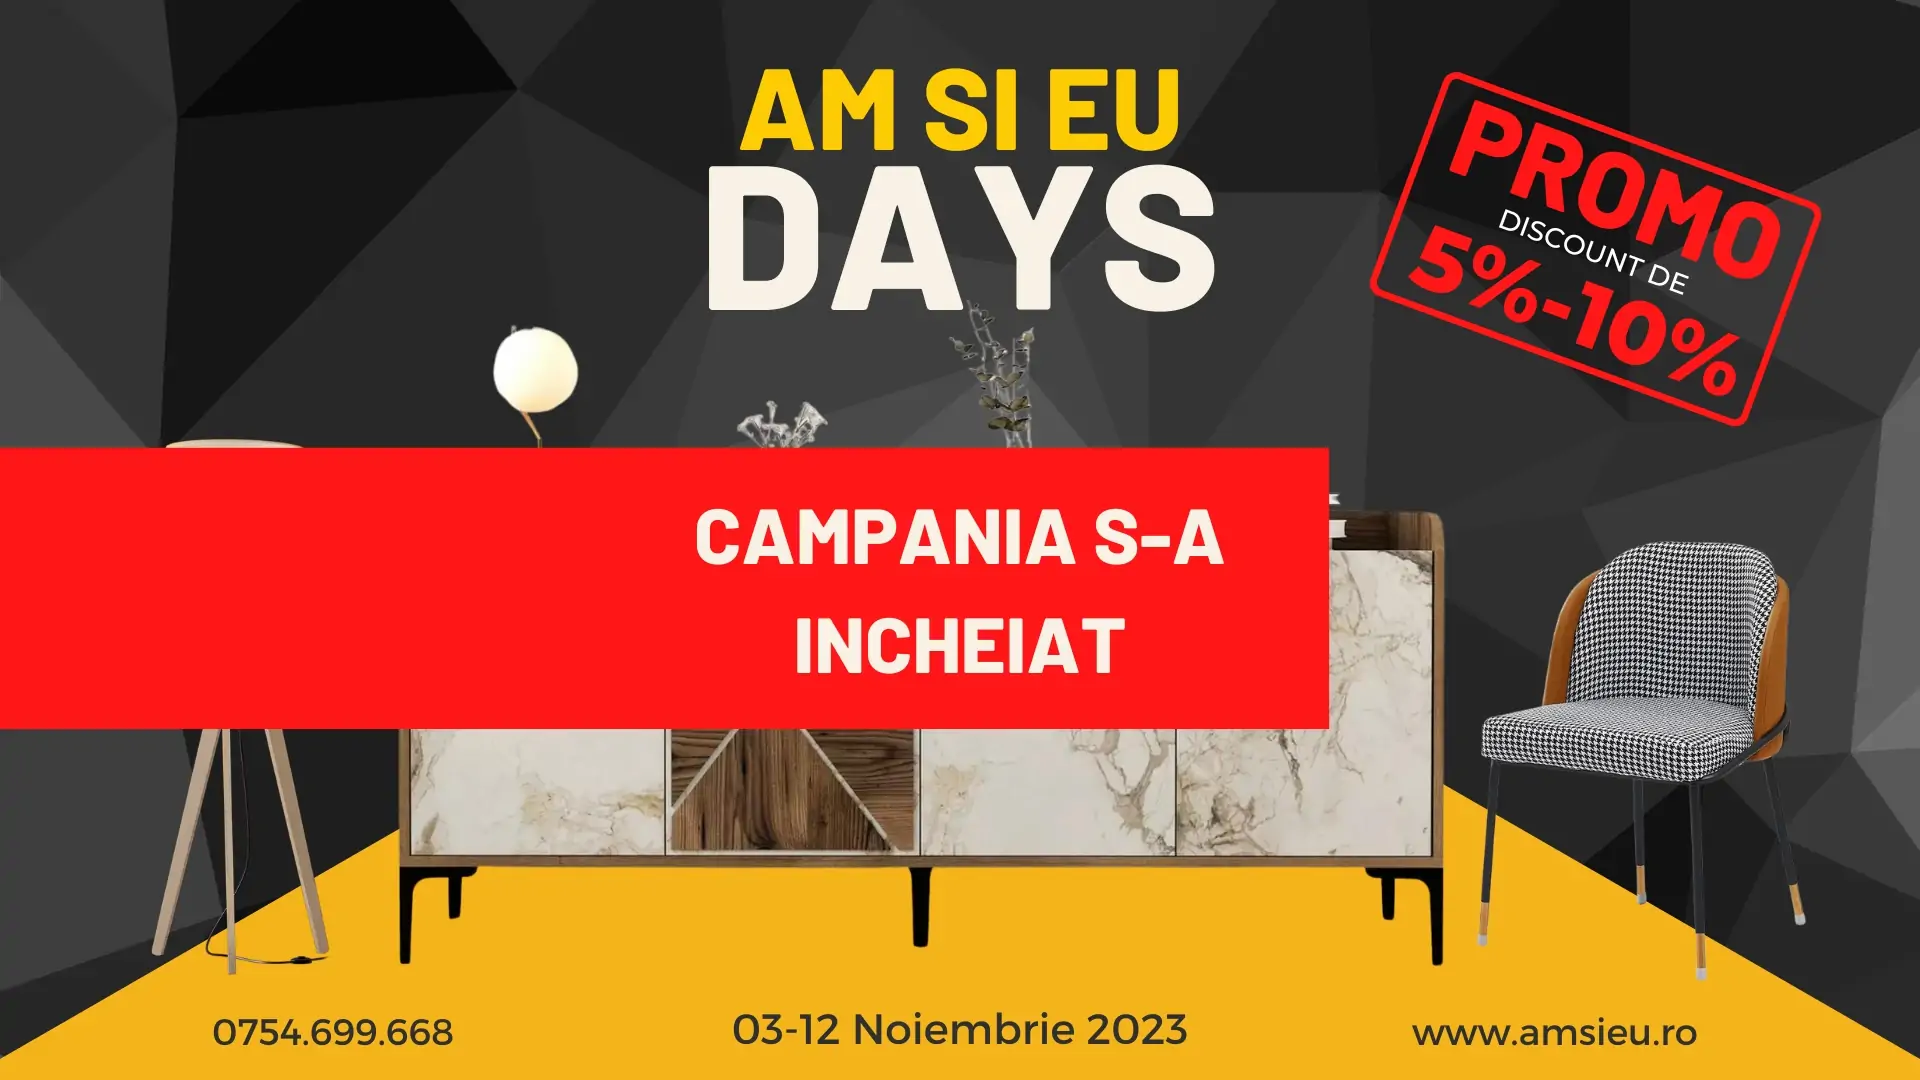 Campania AM SI EU Days 2023 pe amsieu.ro